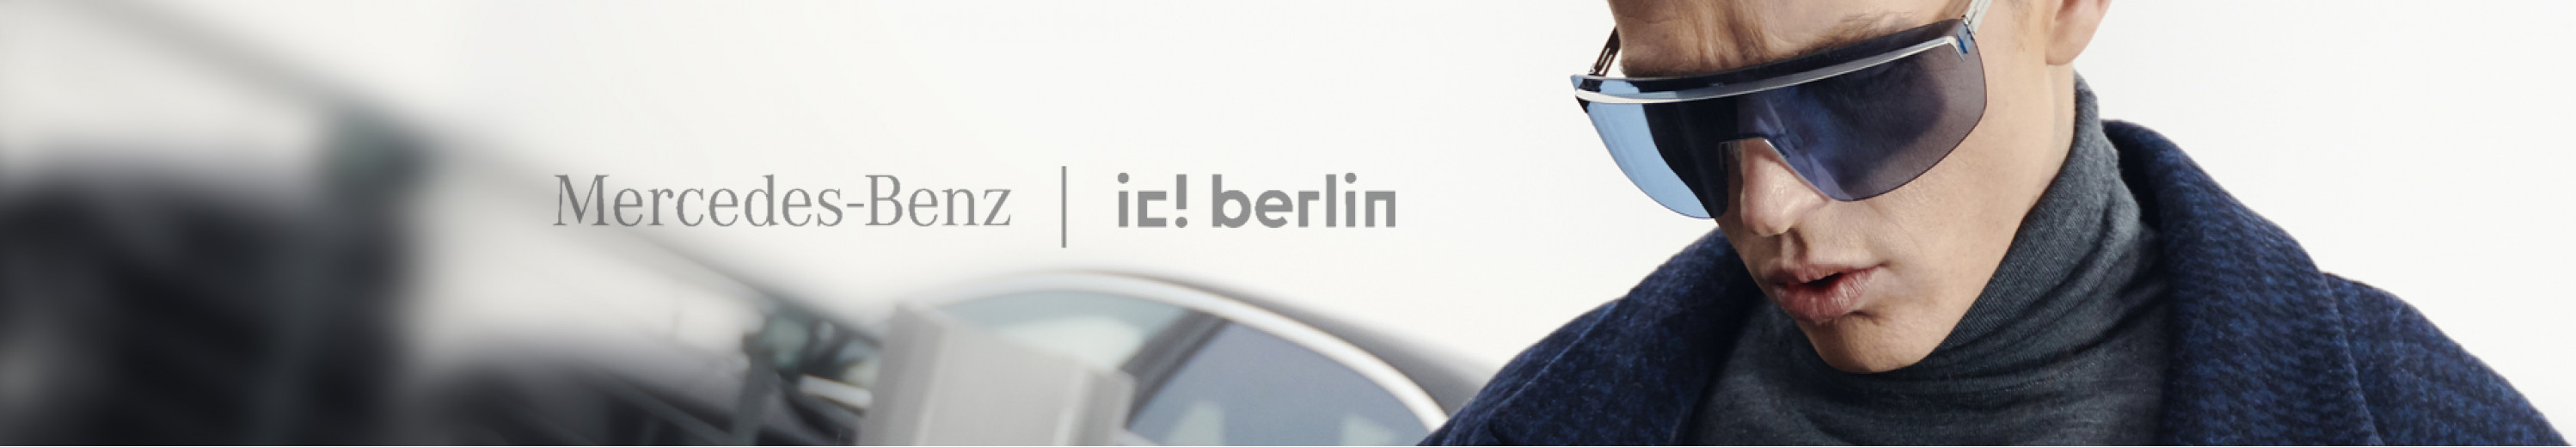 ic! Berlin Mercedes-Benz Eyewear Collection